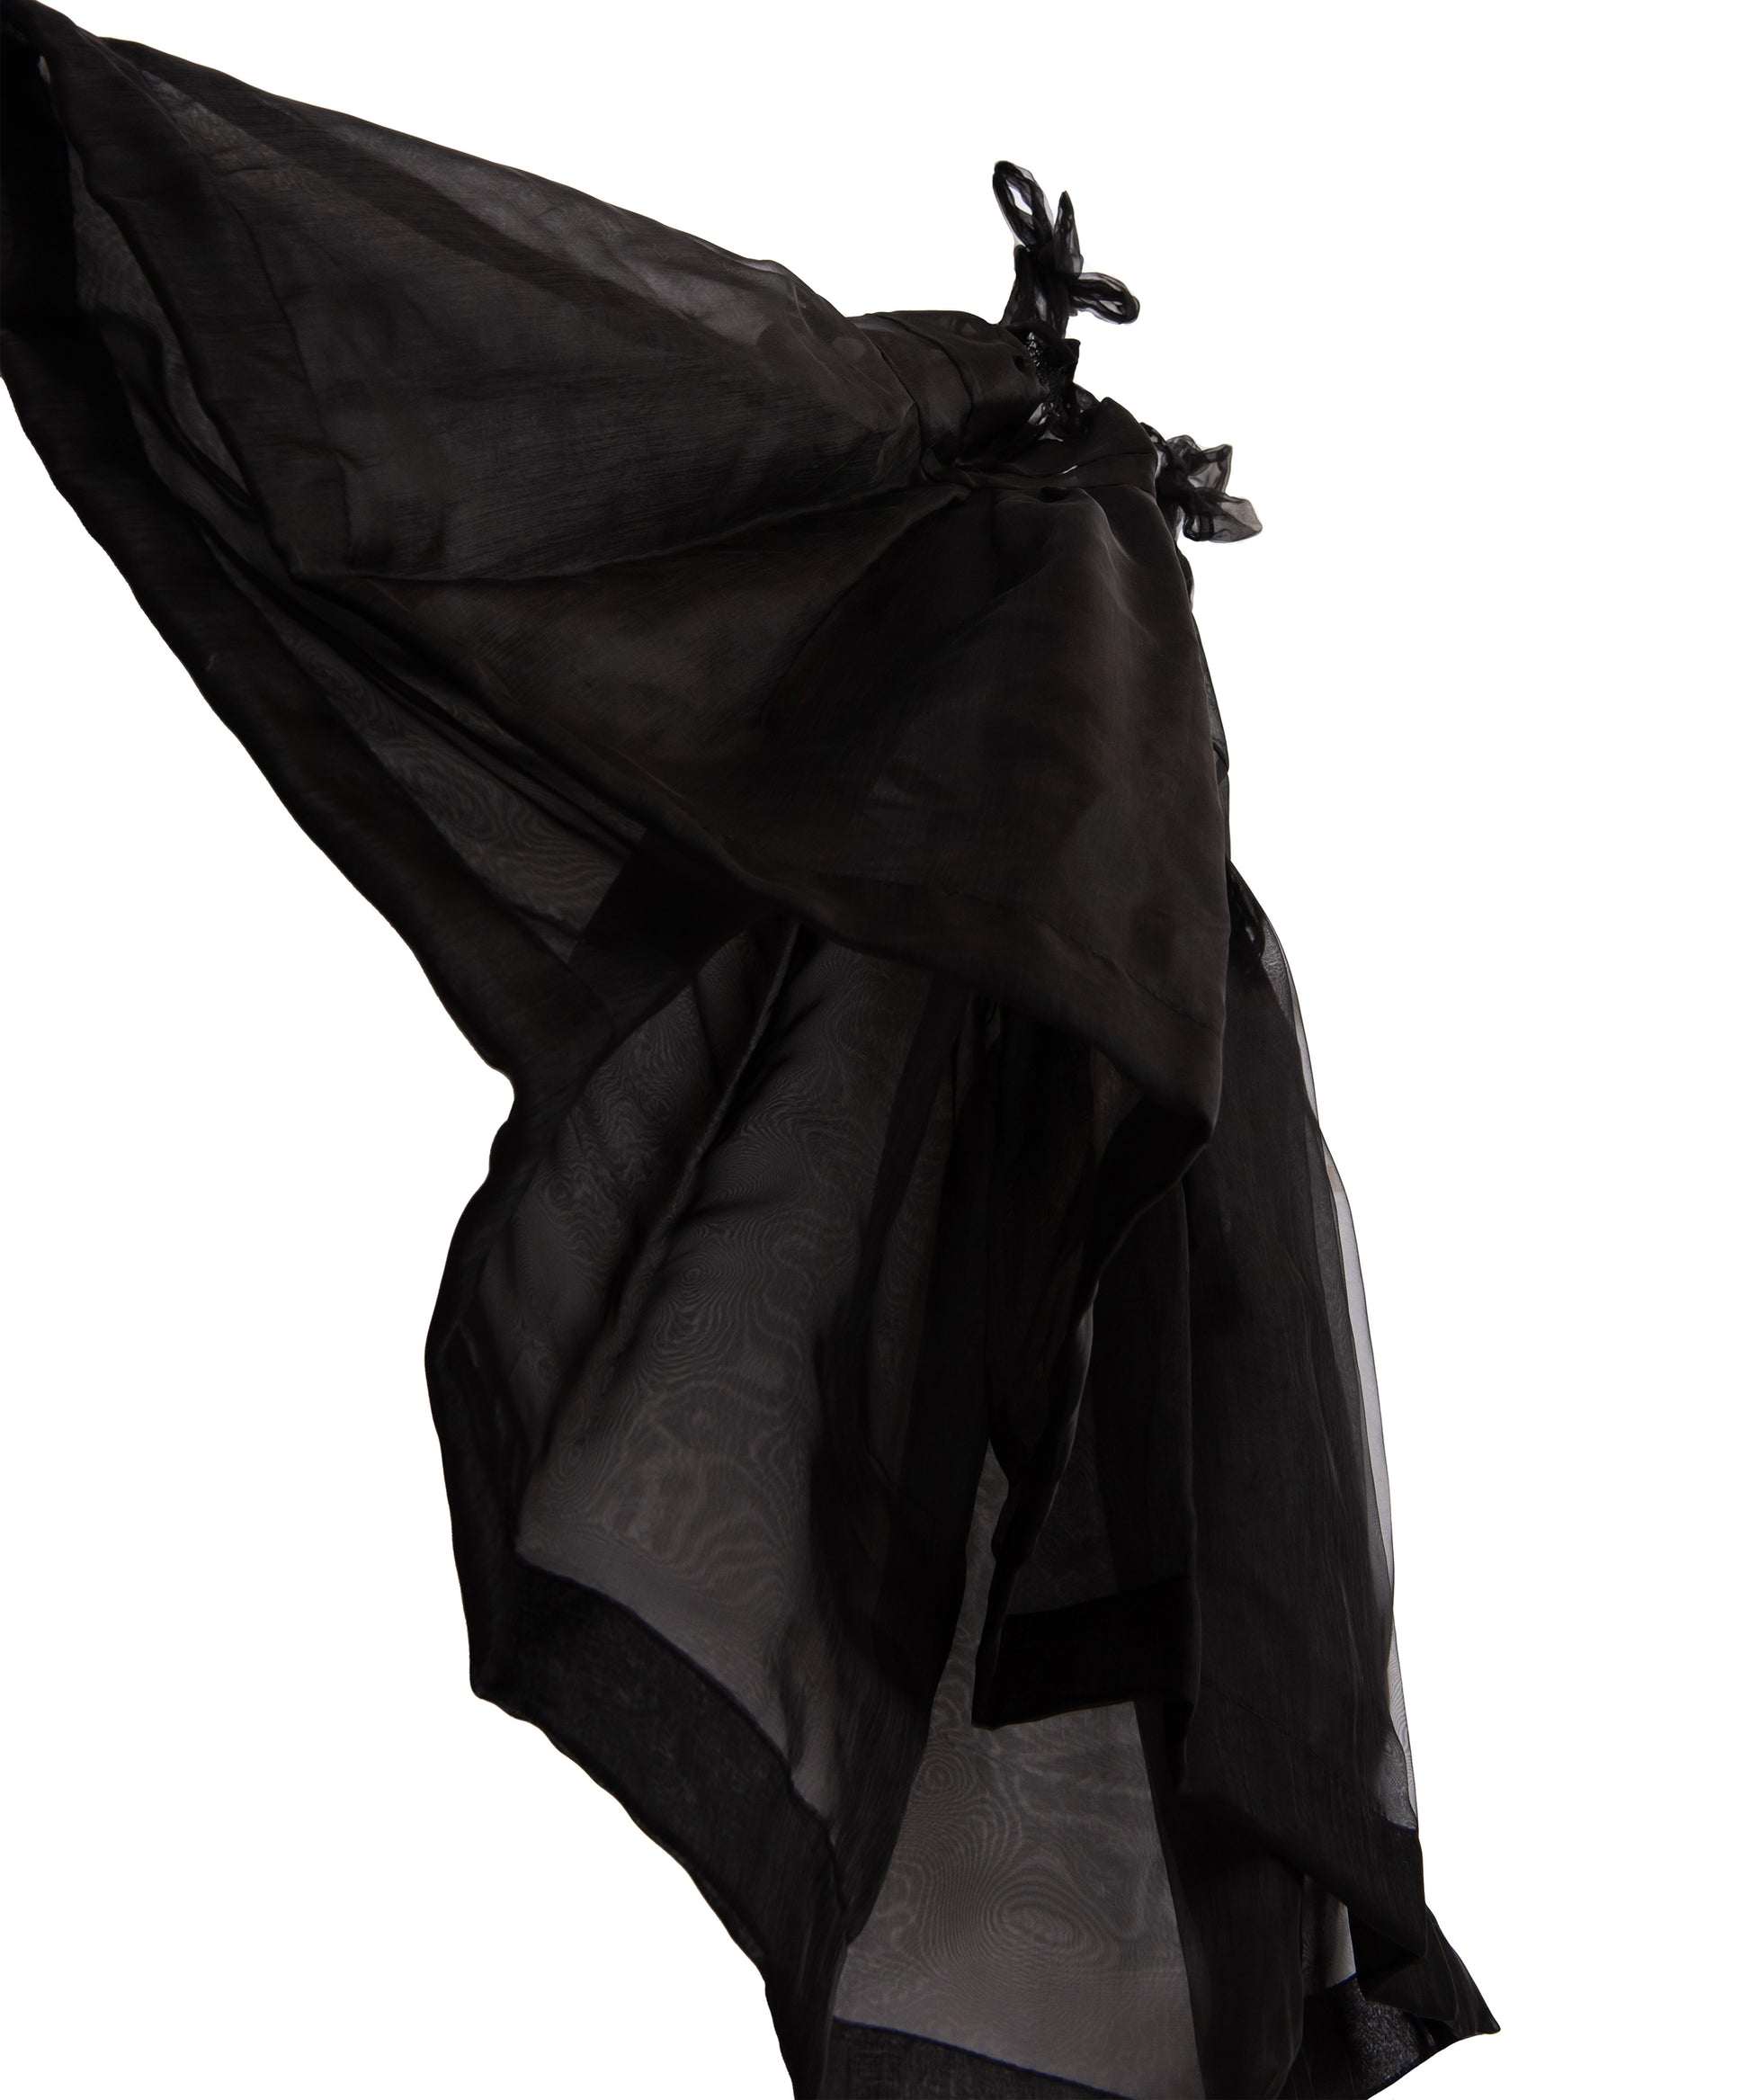 BUFFY 2.0 Black Organza Waterfall Dress DELTA OF PHOENIX